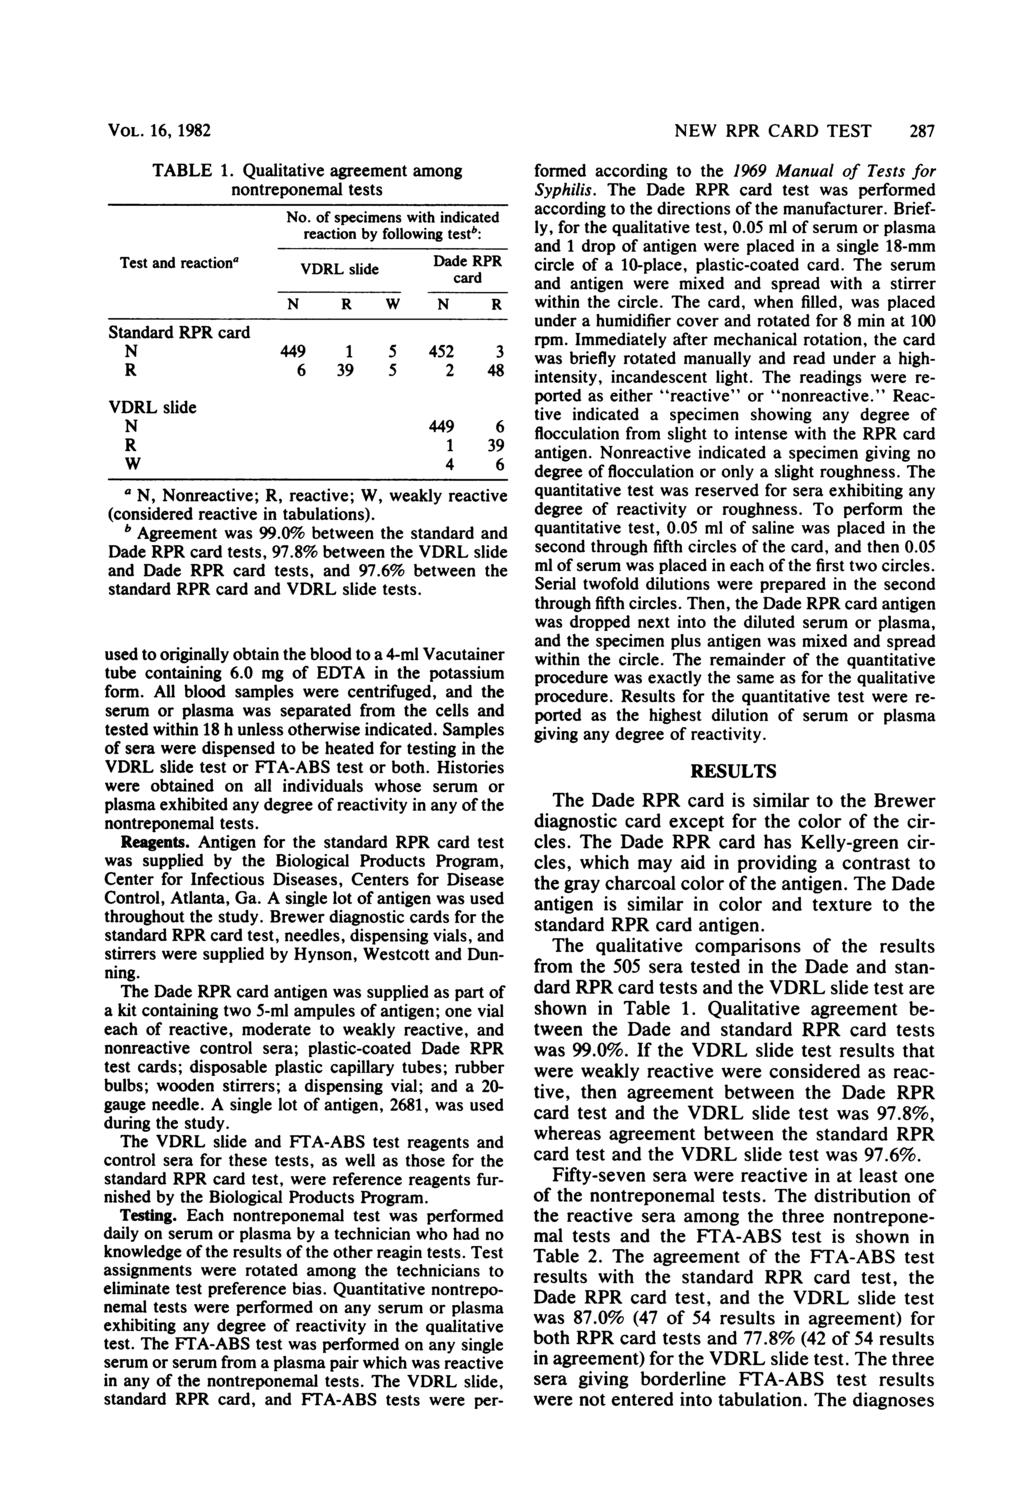 VOL. 16, 1982 TABLE 1. Qualitative agreement among nontreponemal tests No.